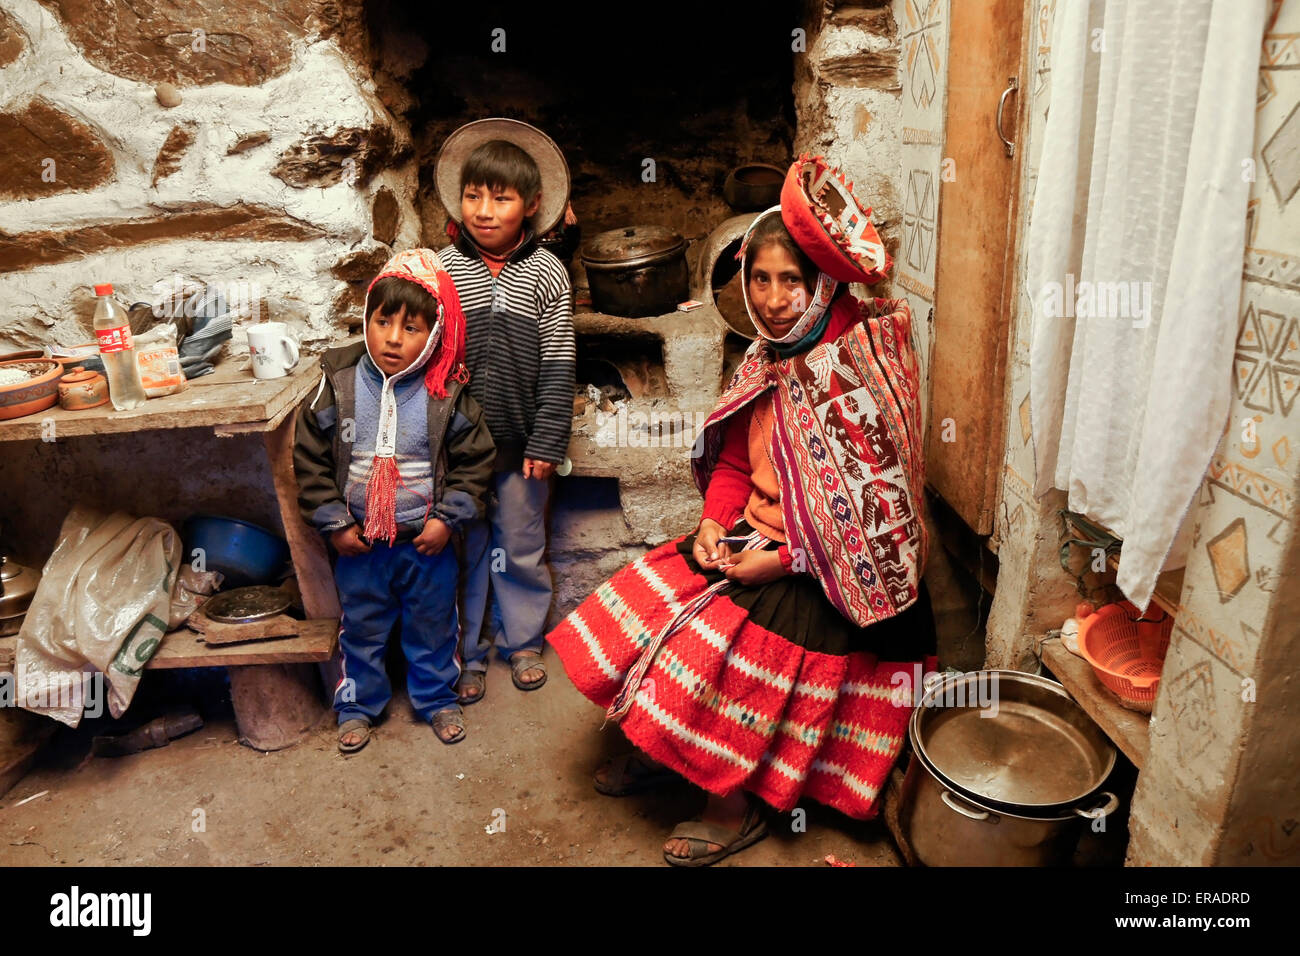 Quechua Indian woman and children in home, Patacancha, Peru Stock Photo